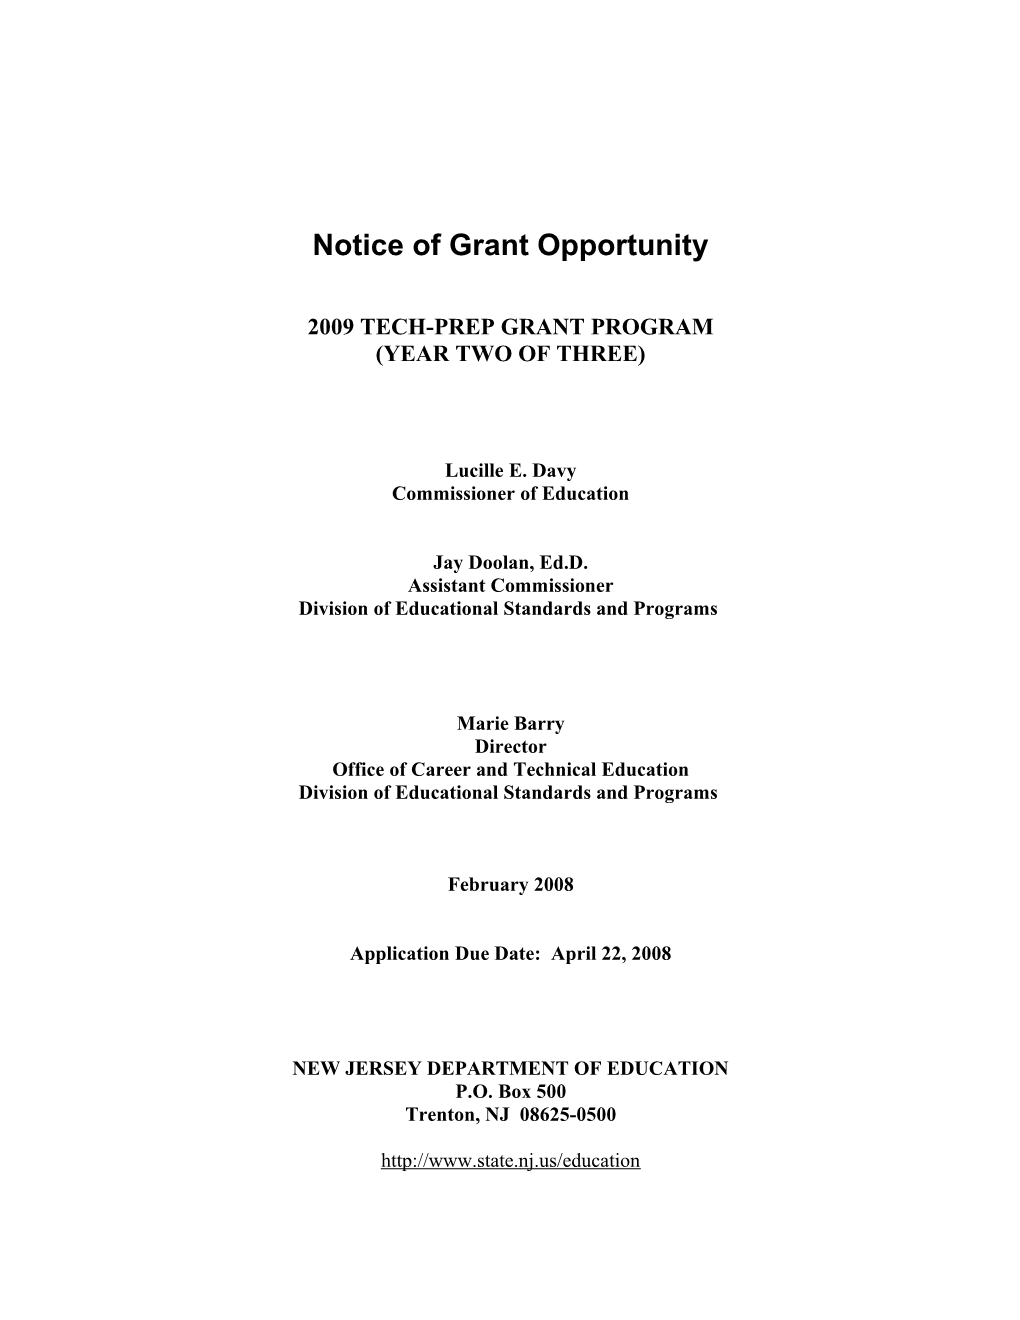 Section Ii: Grant Program Information s4